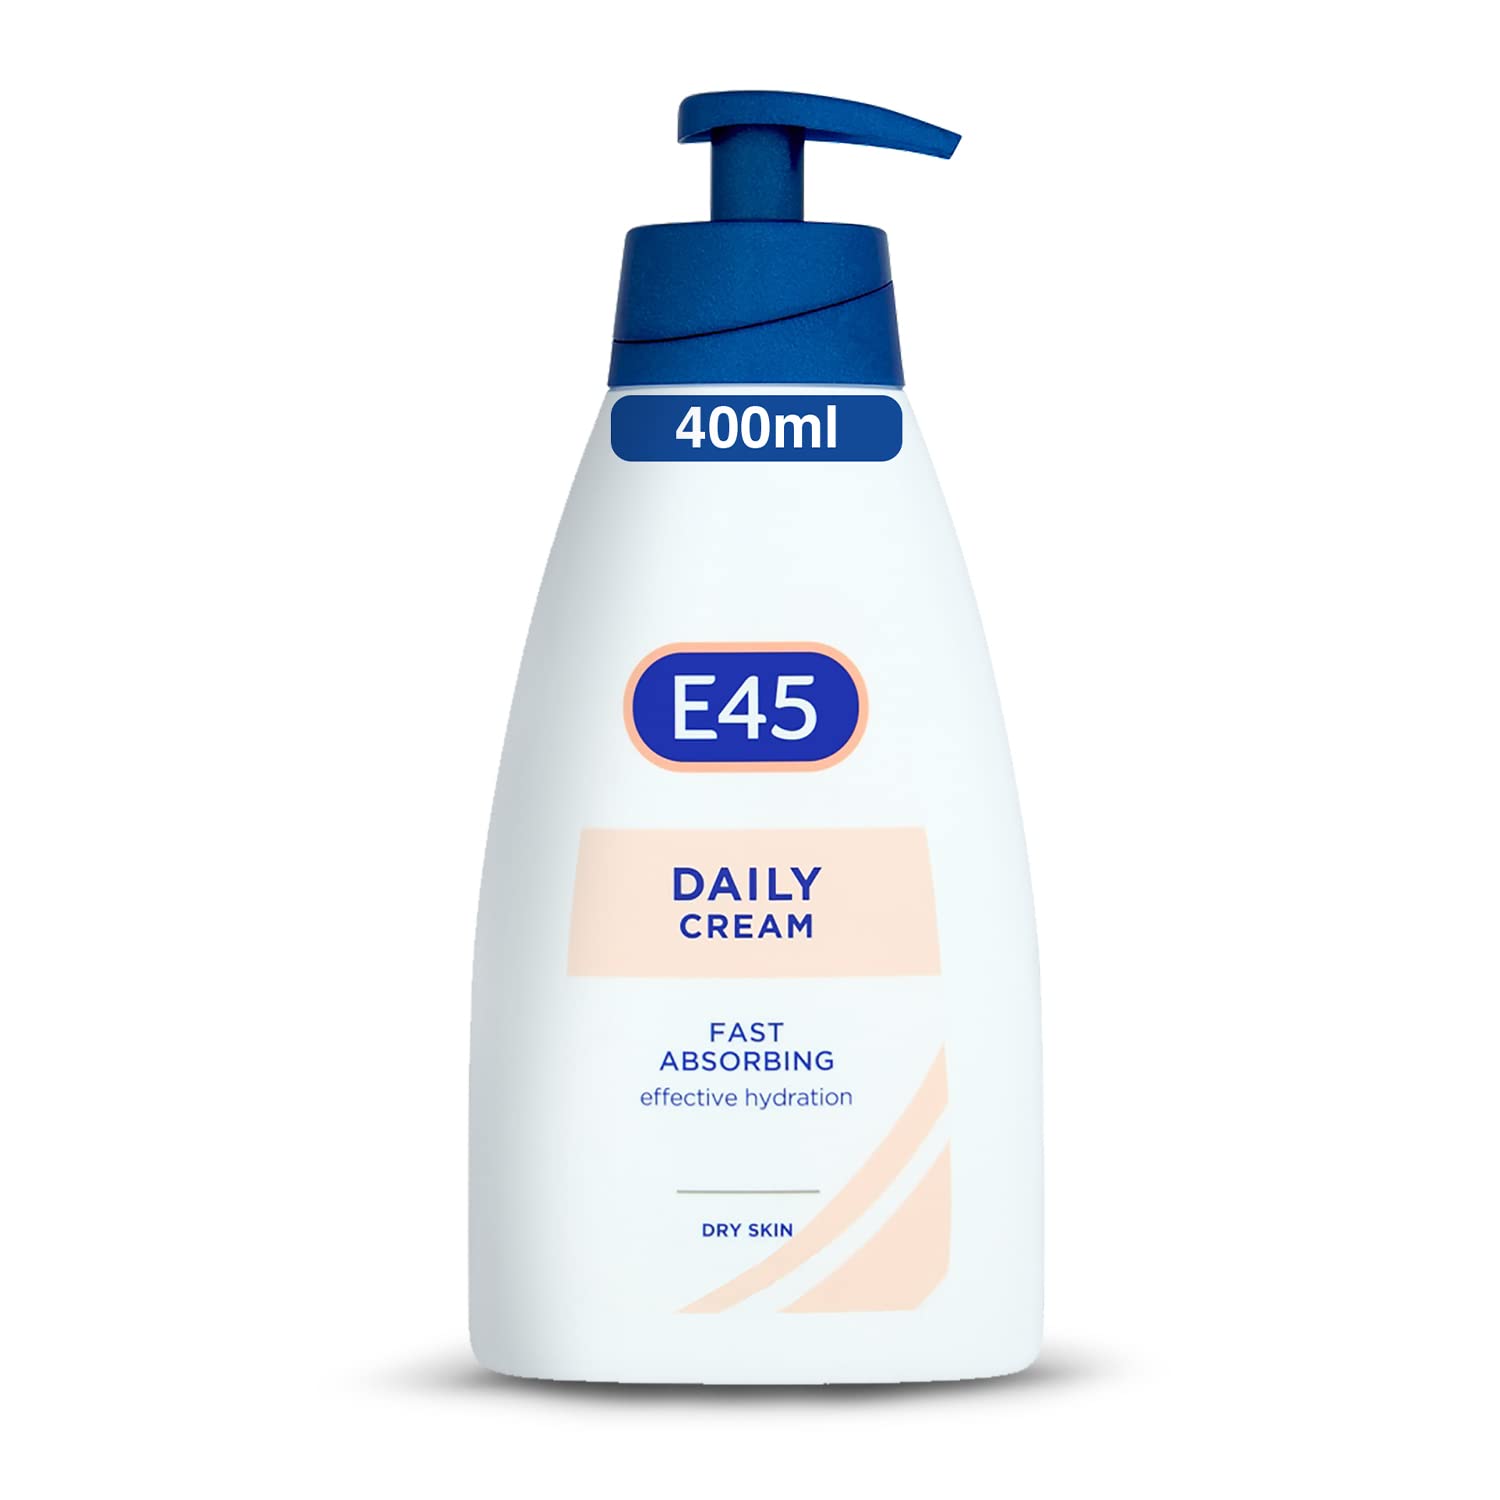 E45 Daily Moisturiser Cream Pump For Dry Skin 400ml